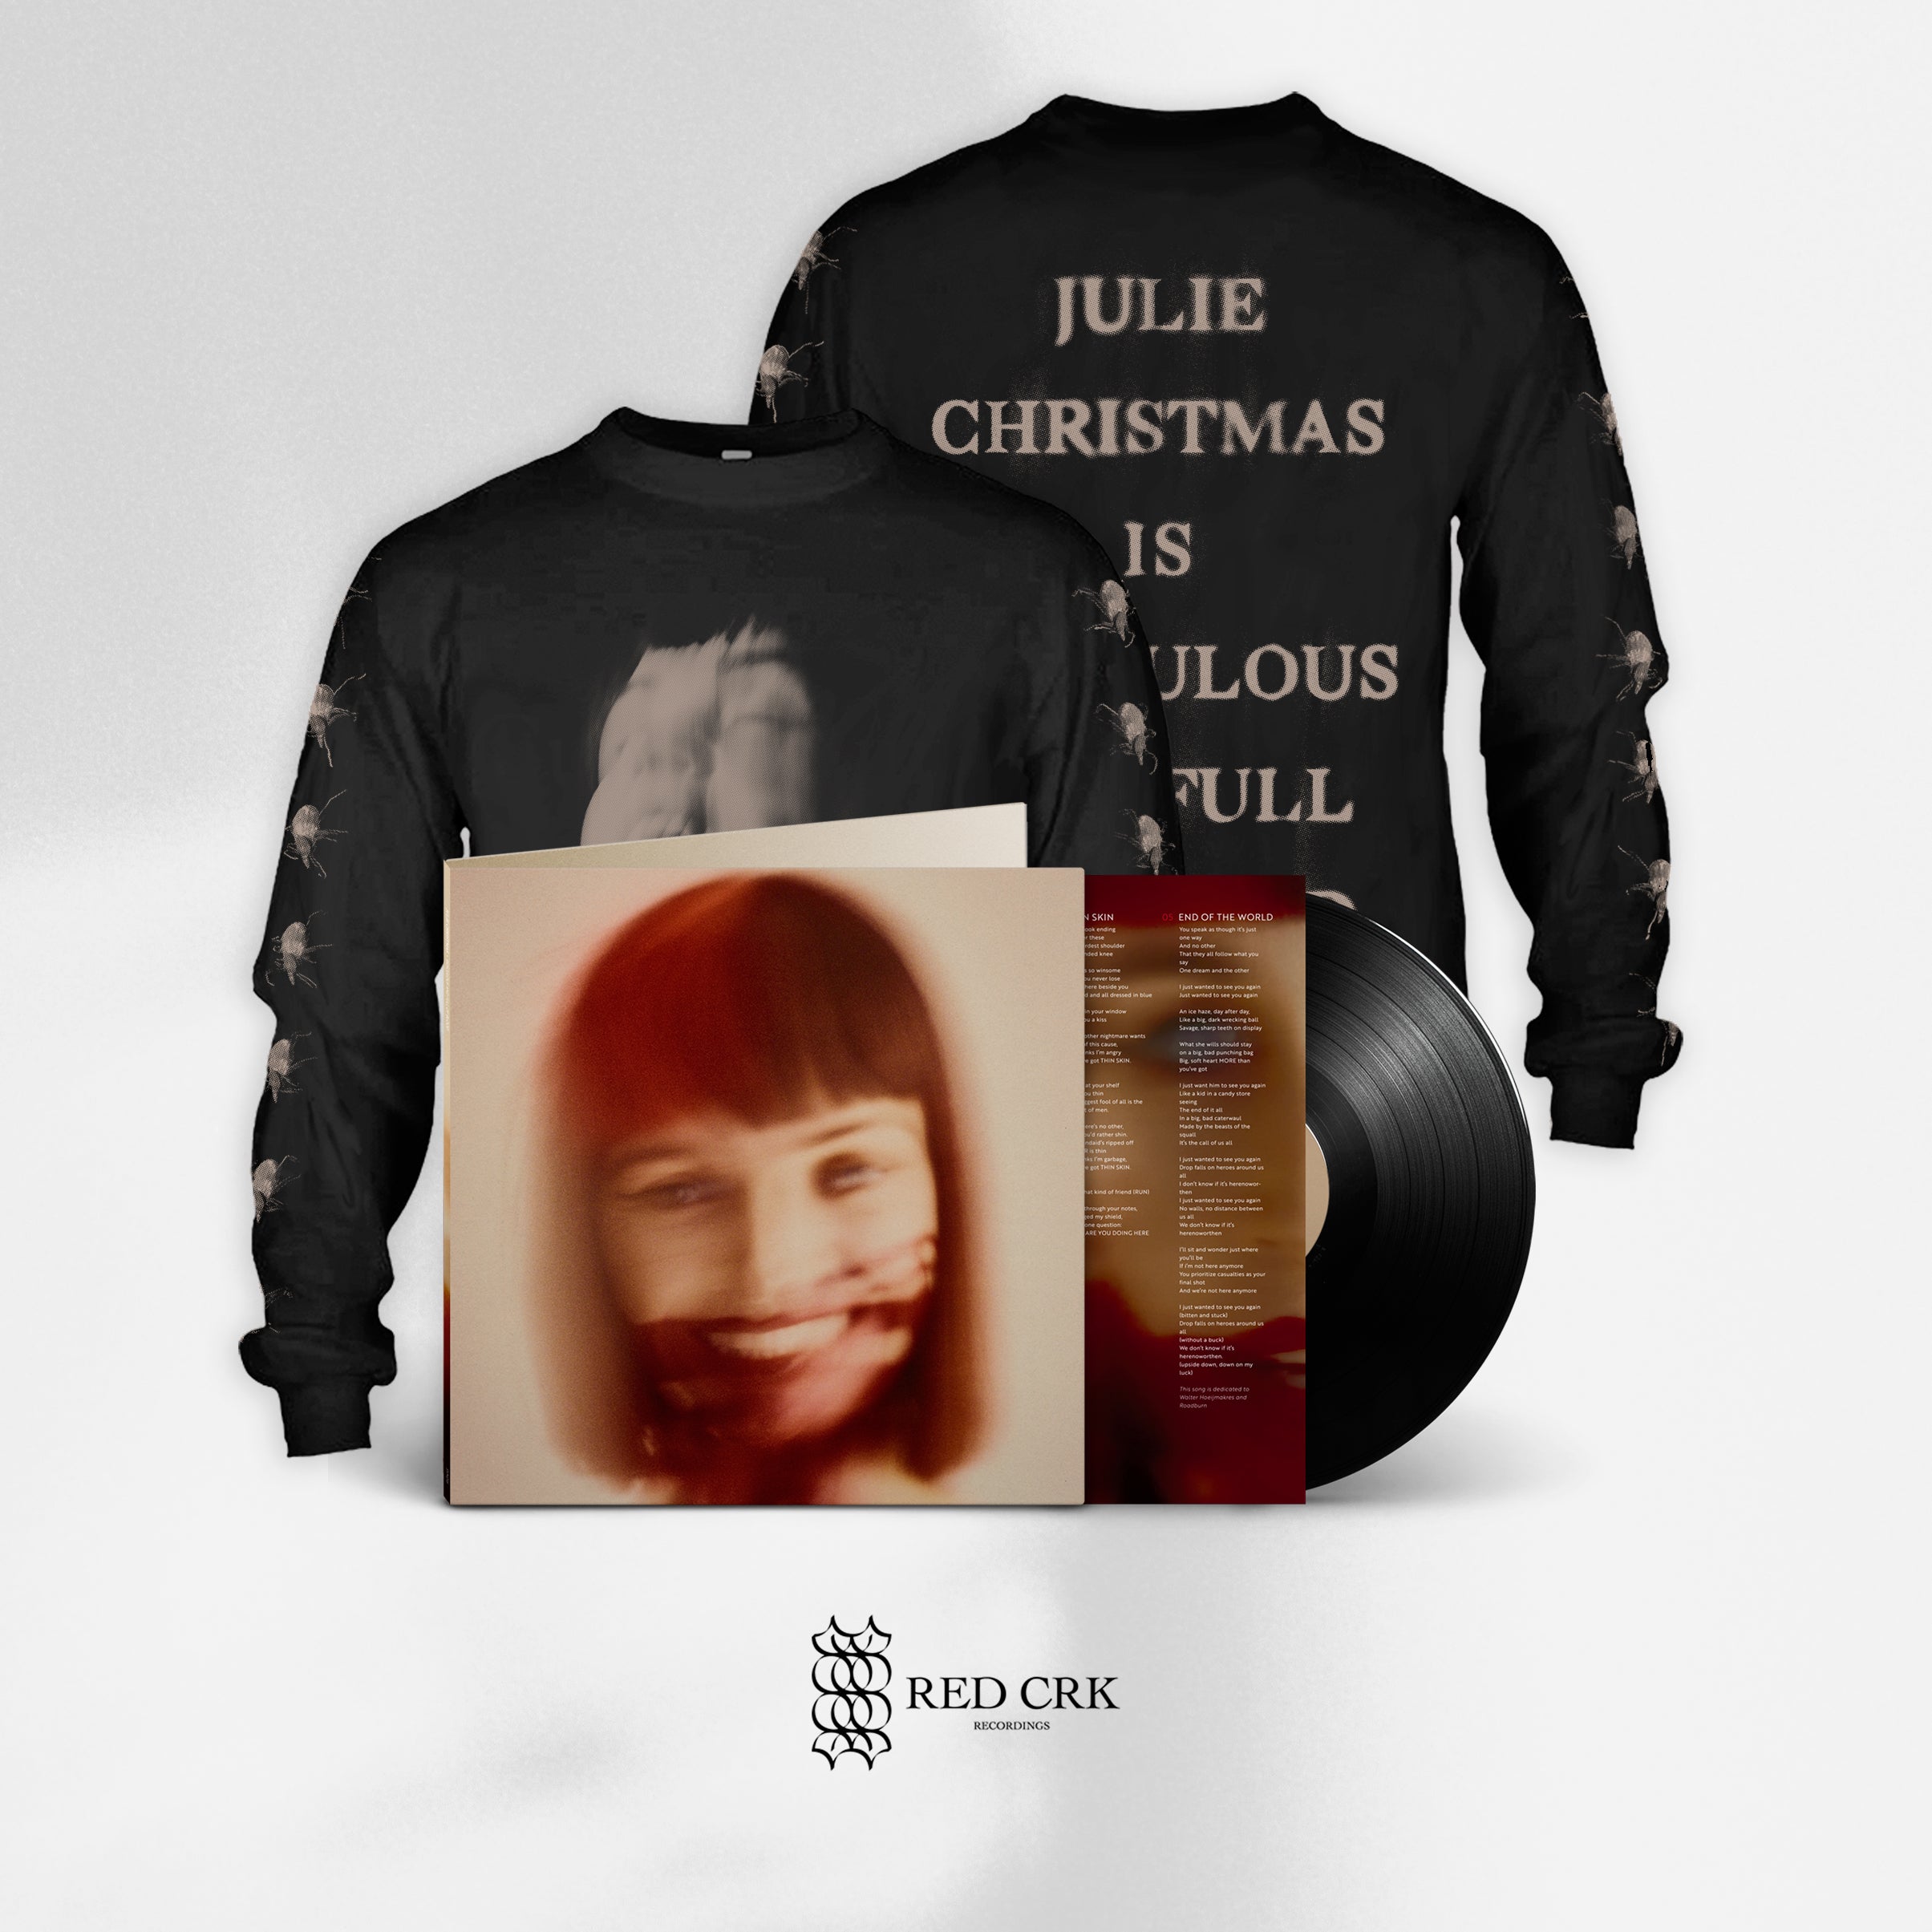 JULIE CHRISTMAS - Ridiculous And Full of Blood (LP) + Screaming (Long Sleeve) Bundle (Pre-Order)